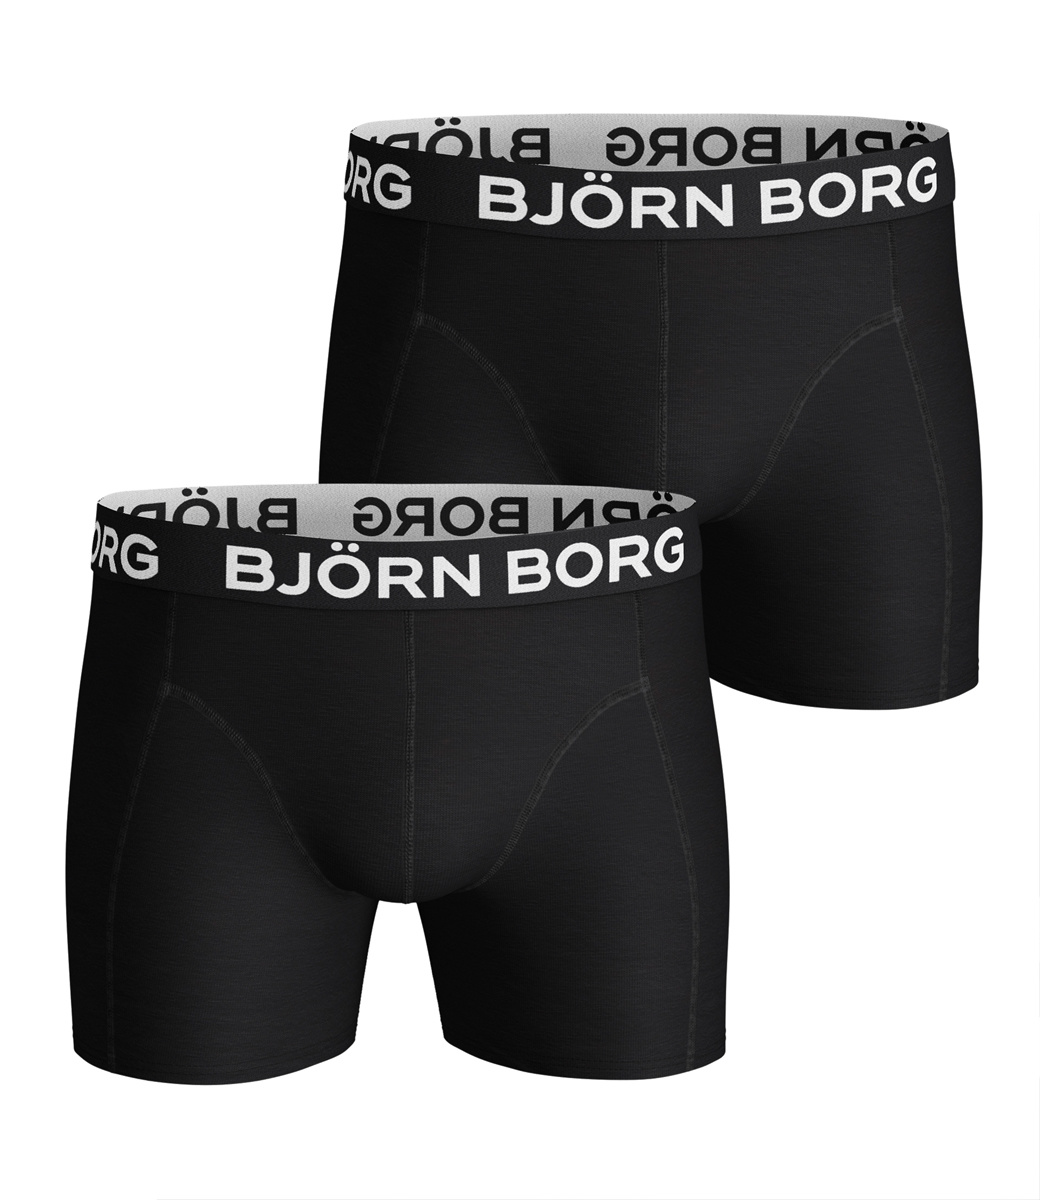 vorm Vrijgevigheid bord 9999-1005 90011 Bjorn Borg heren boxers 2 pack zwart core shorts -  Shirtsupplier.nl